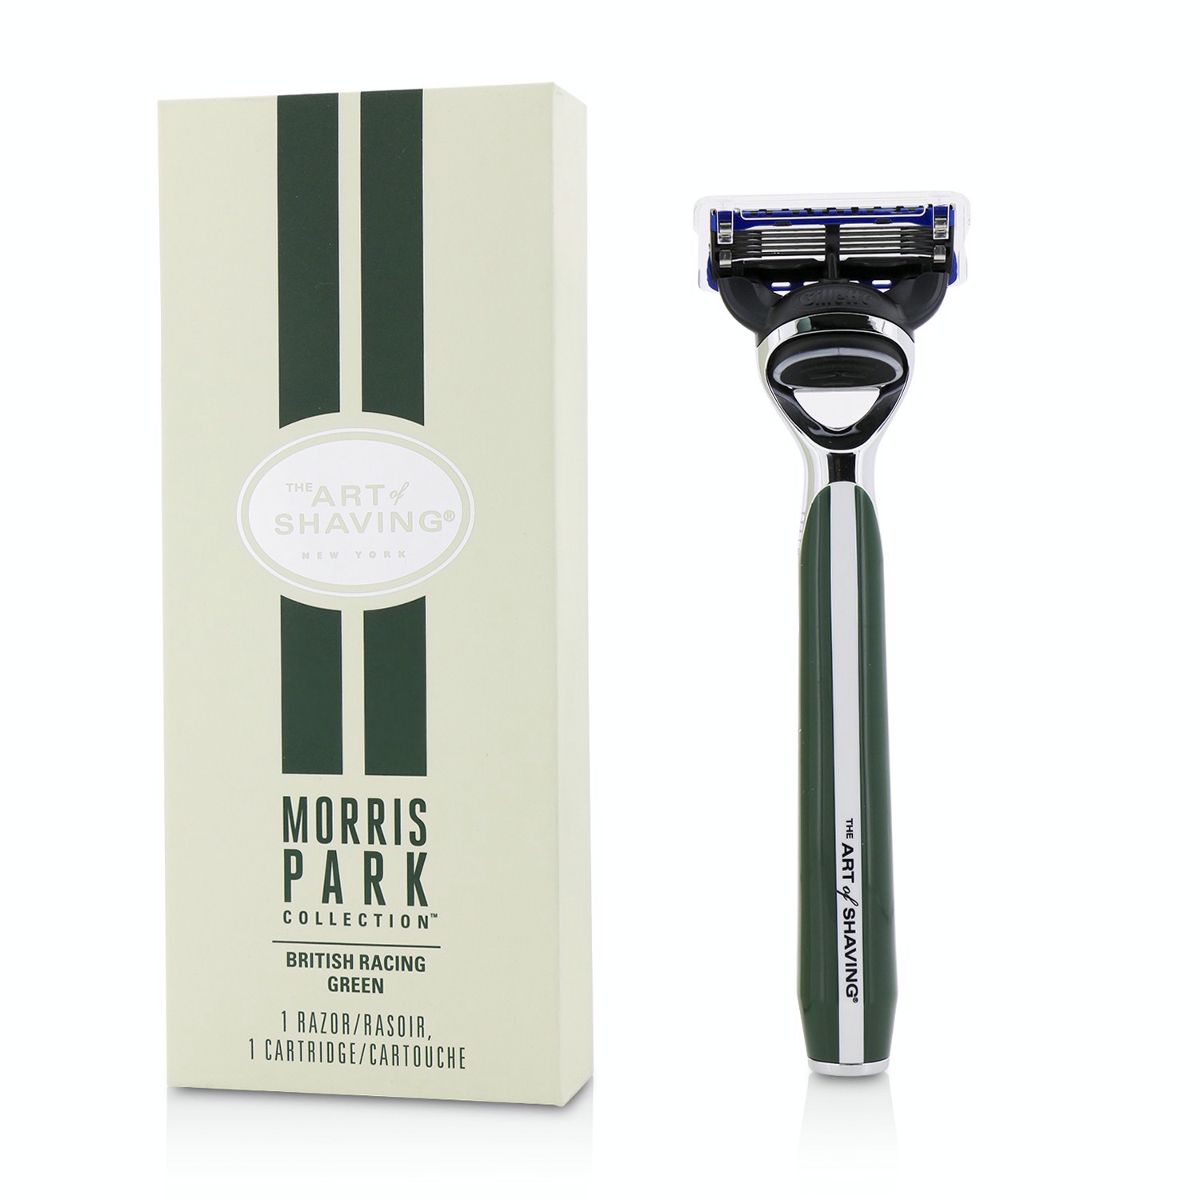 Morris Park Collection Razor - British Racing Green The Art Of Shaving Image